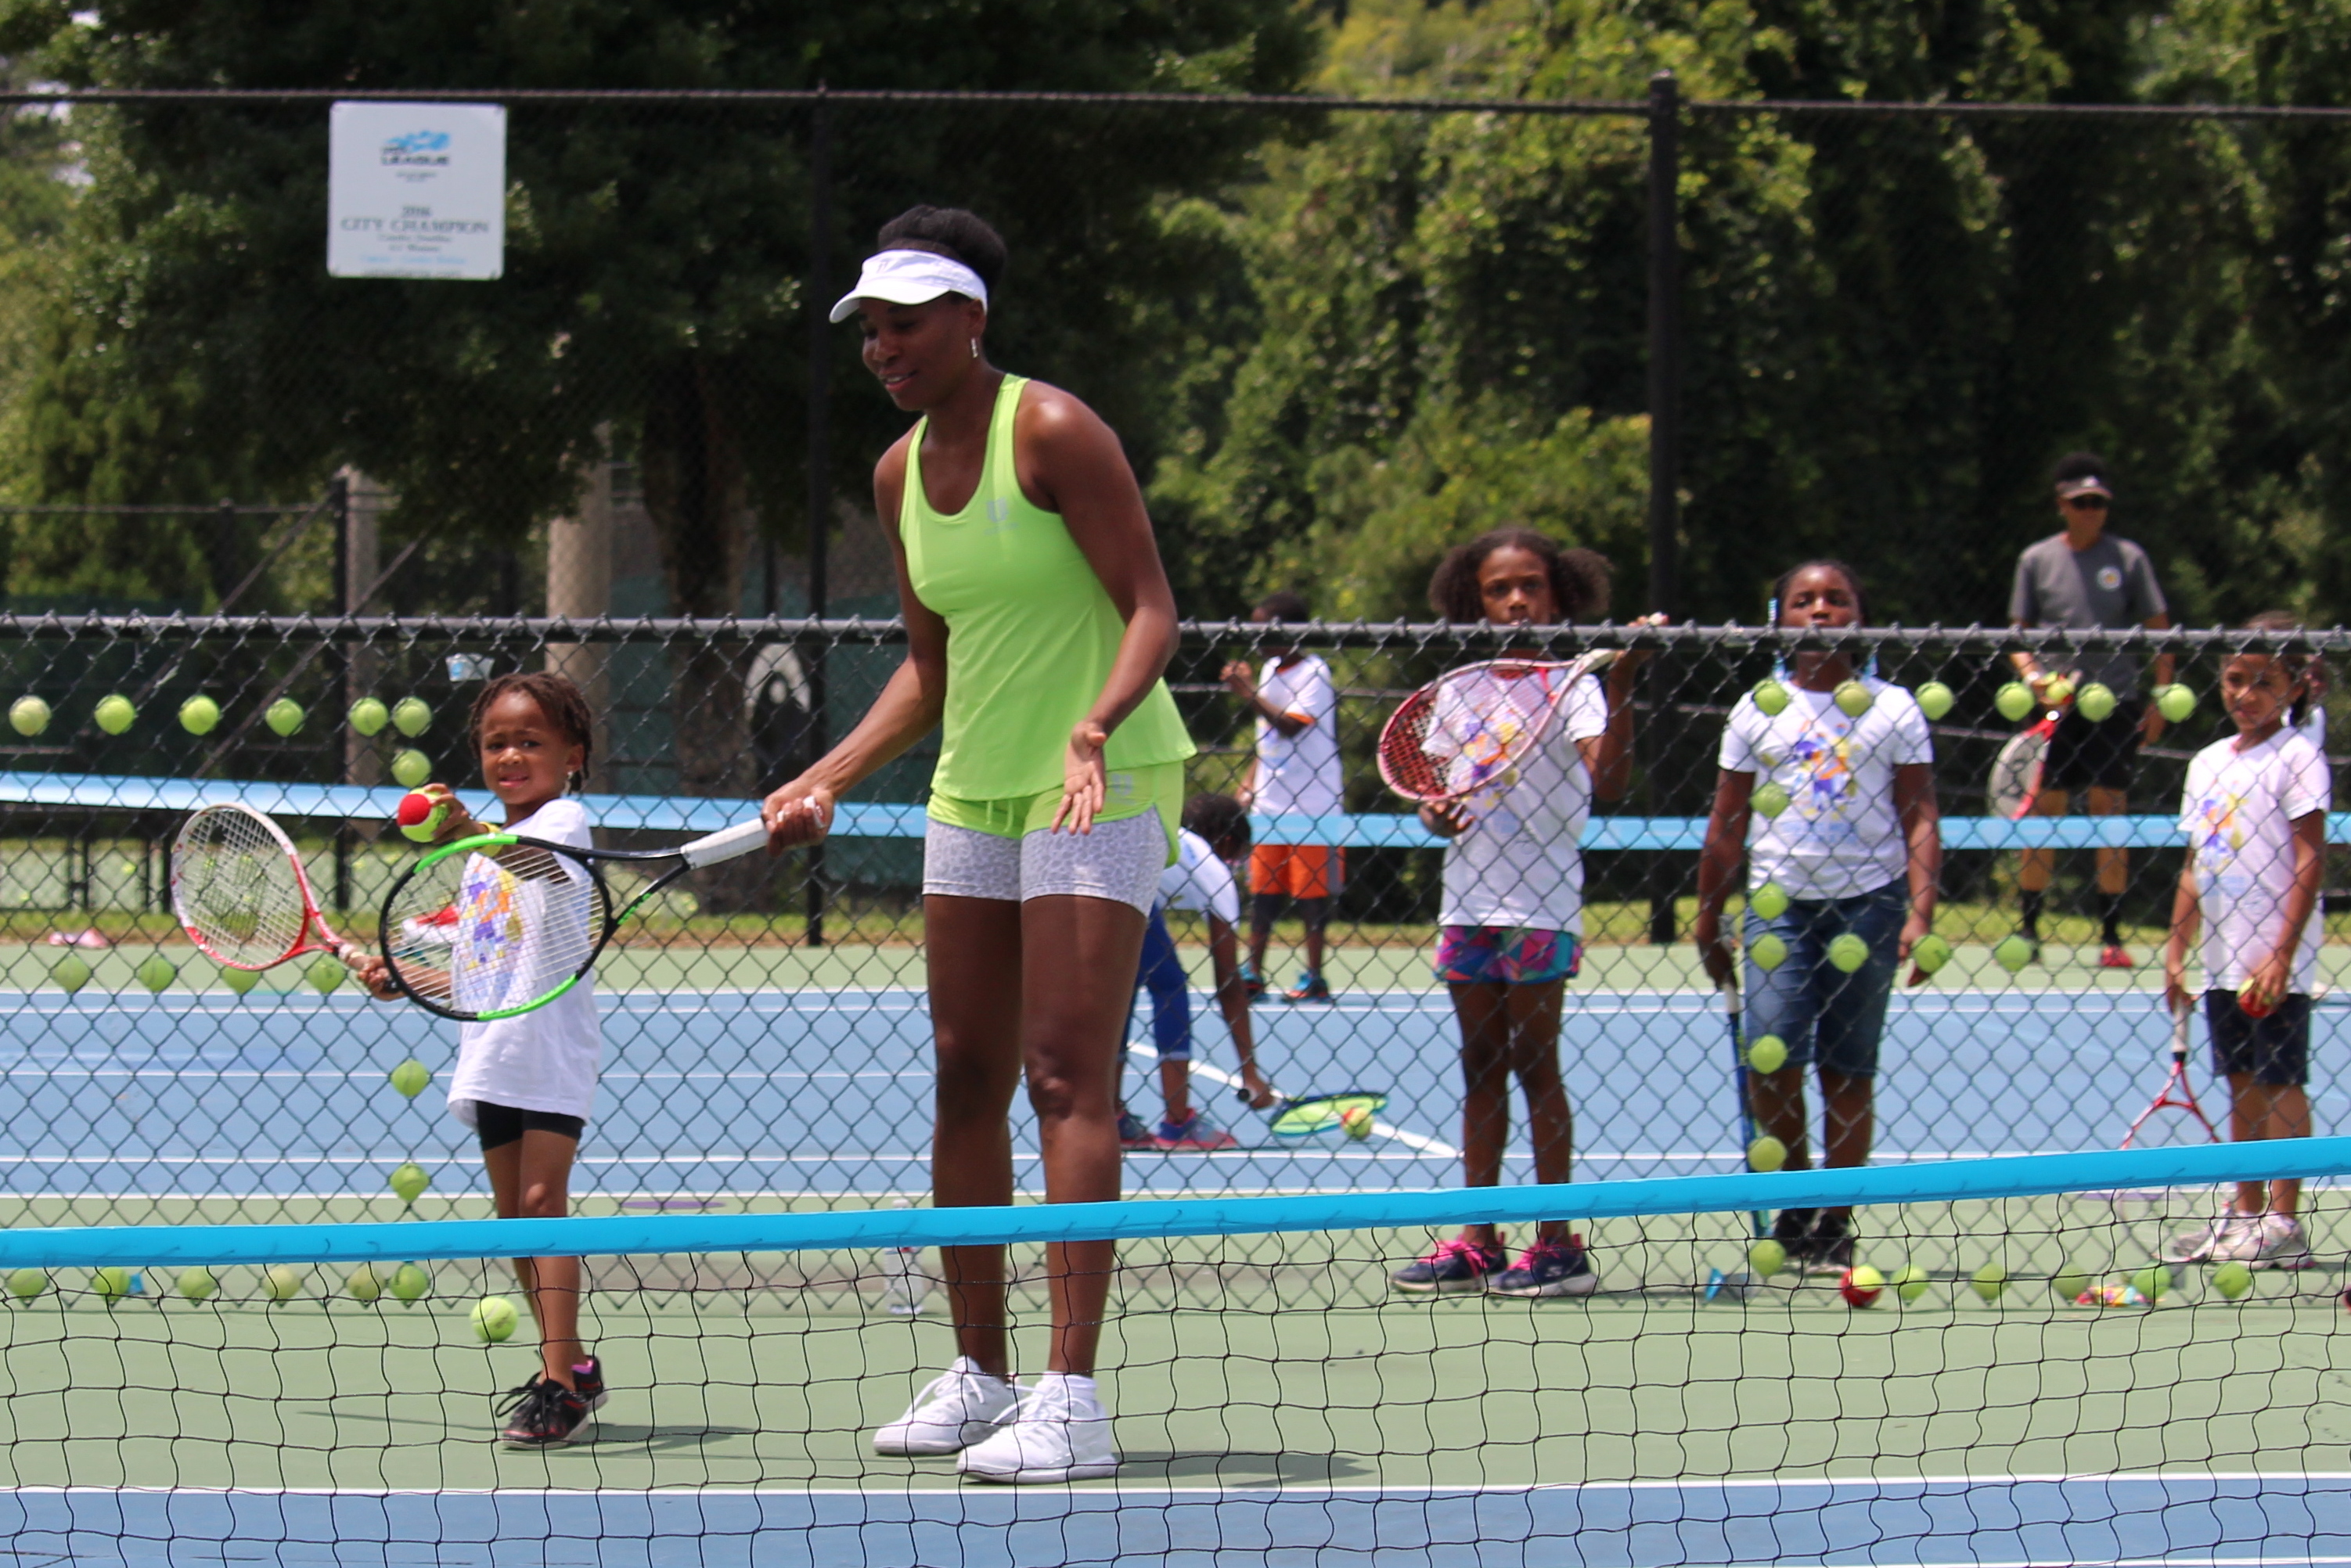 Gallery: Venus Williams Visits South Fulton Tennis Center